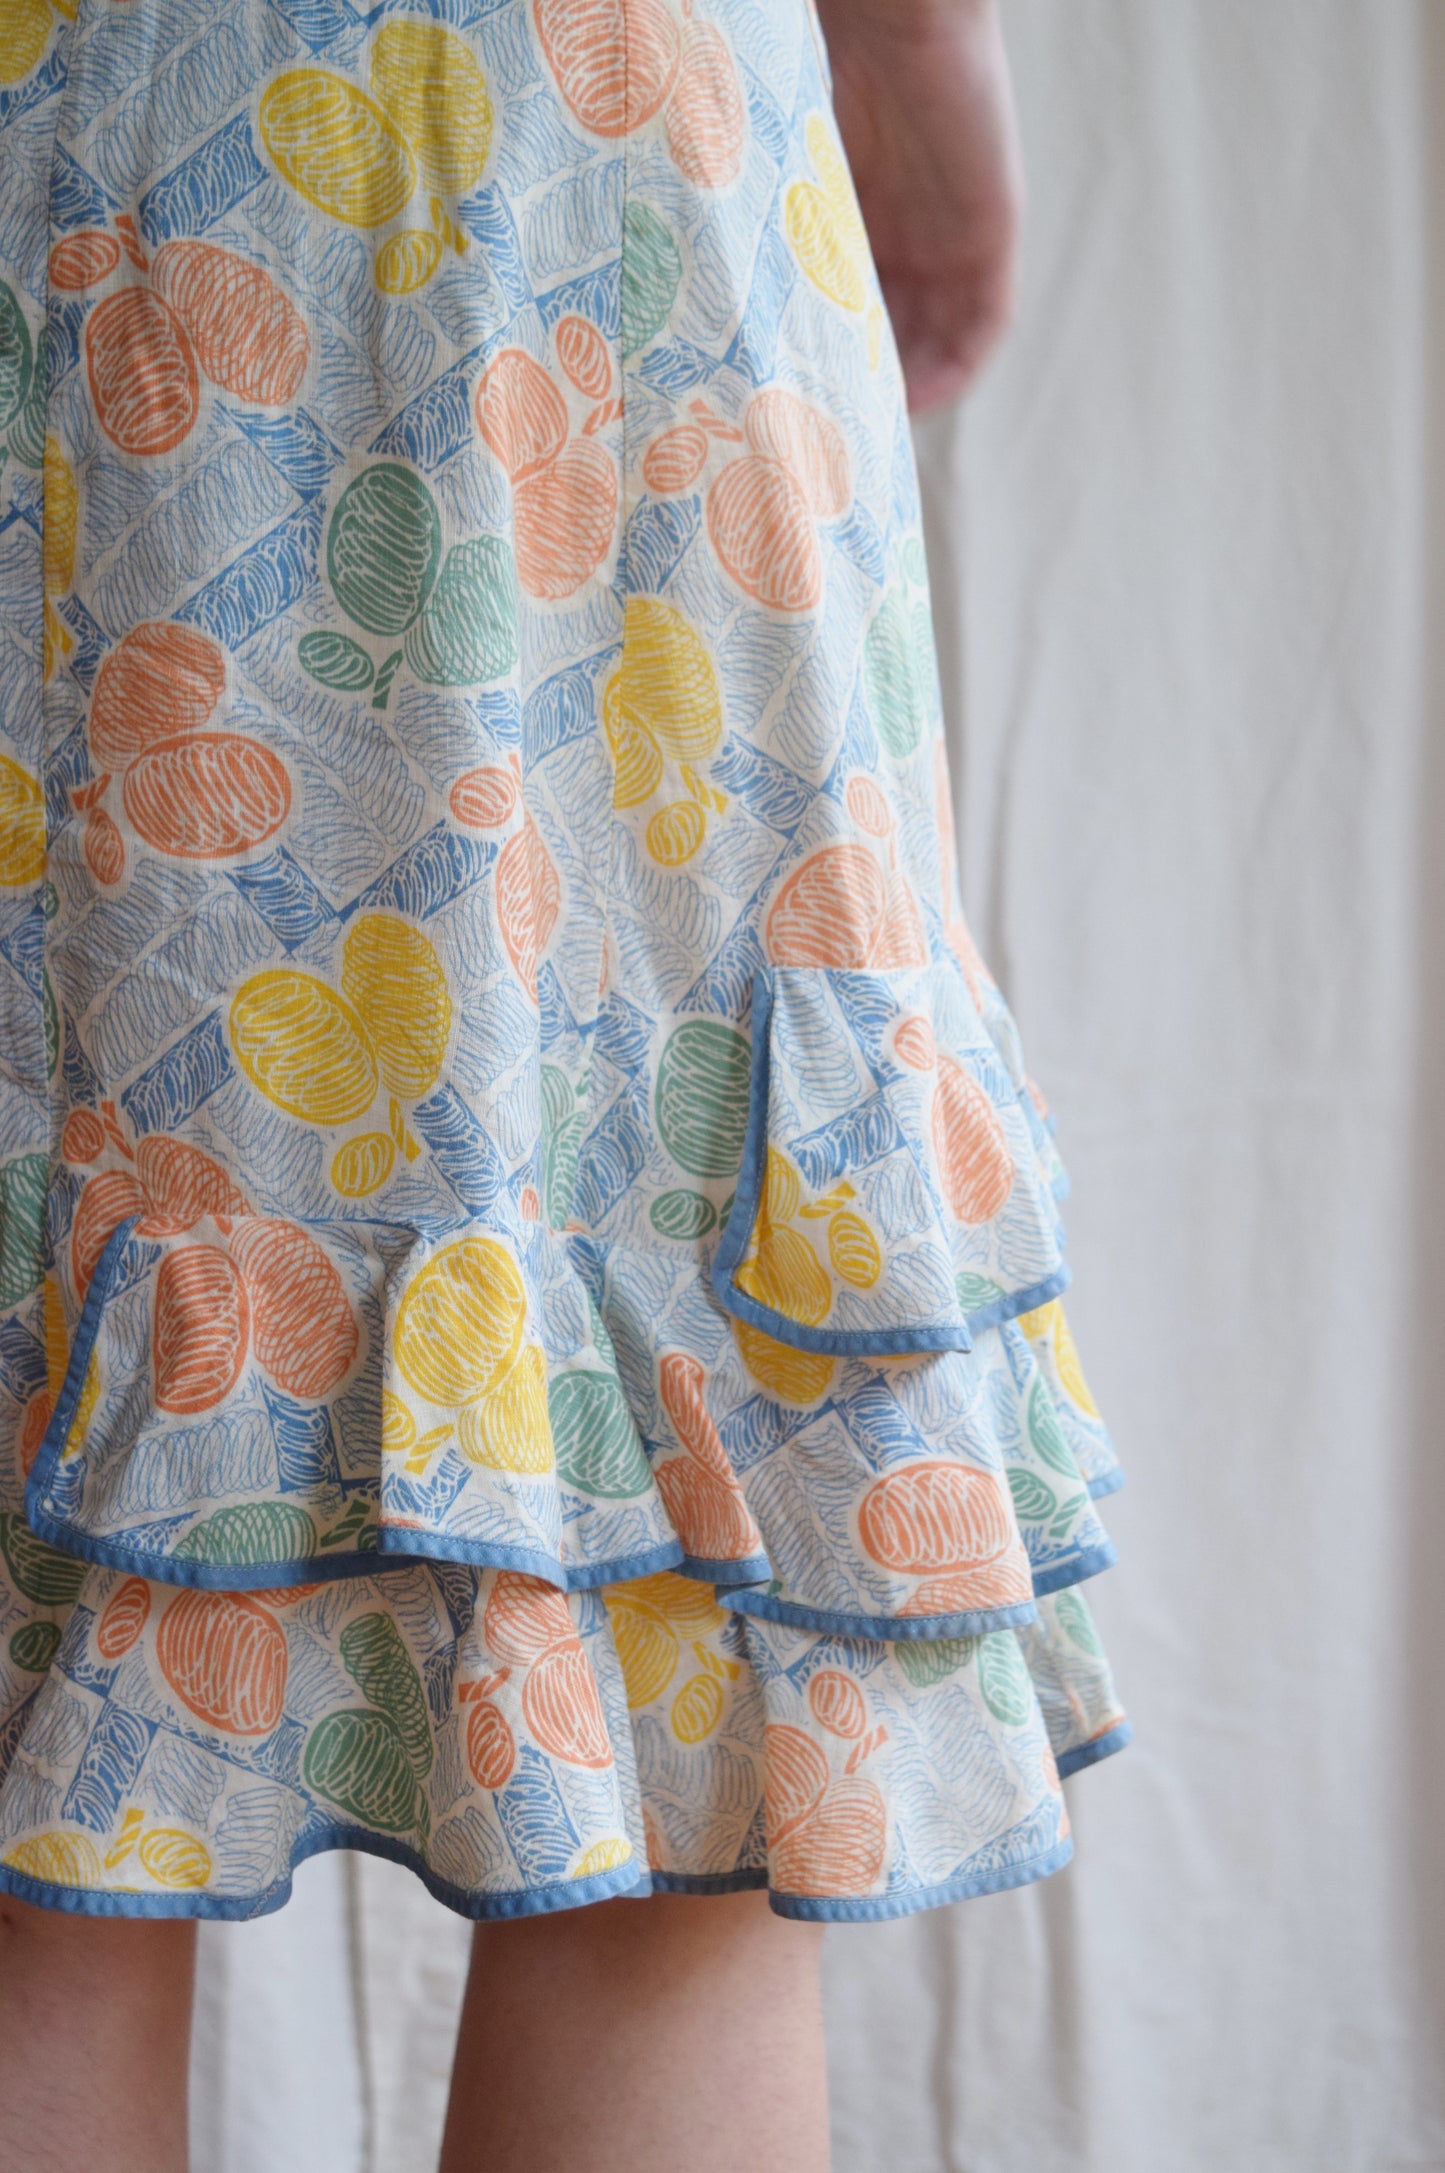 1930s Cotton Day Dress in an Abstract Citrus and Trellis Print | Vintage Lemon / Lime / Orange Novelty Print Dress